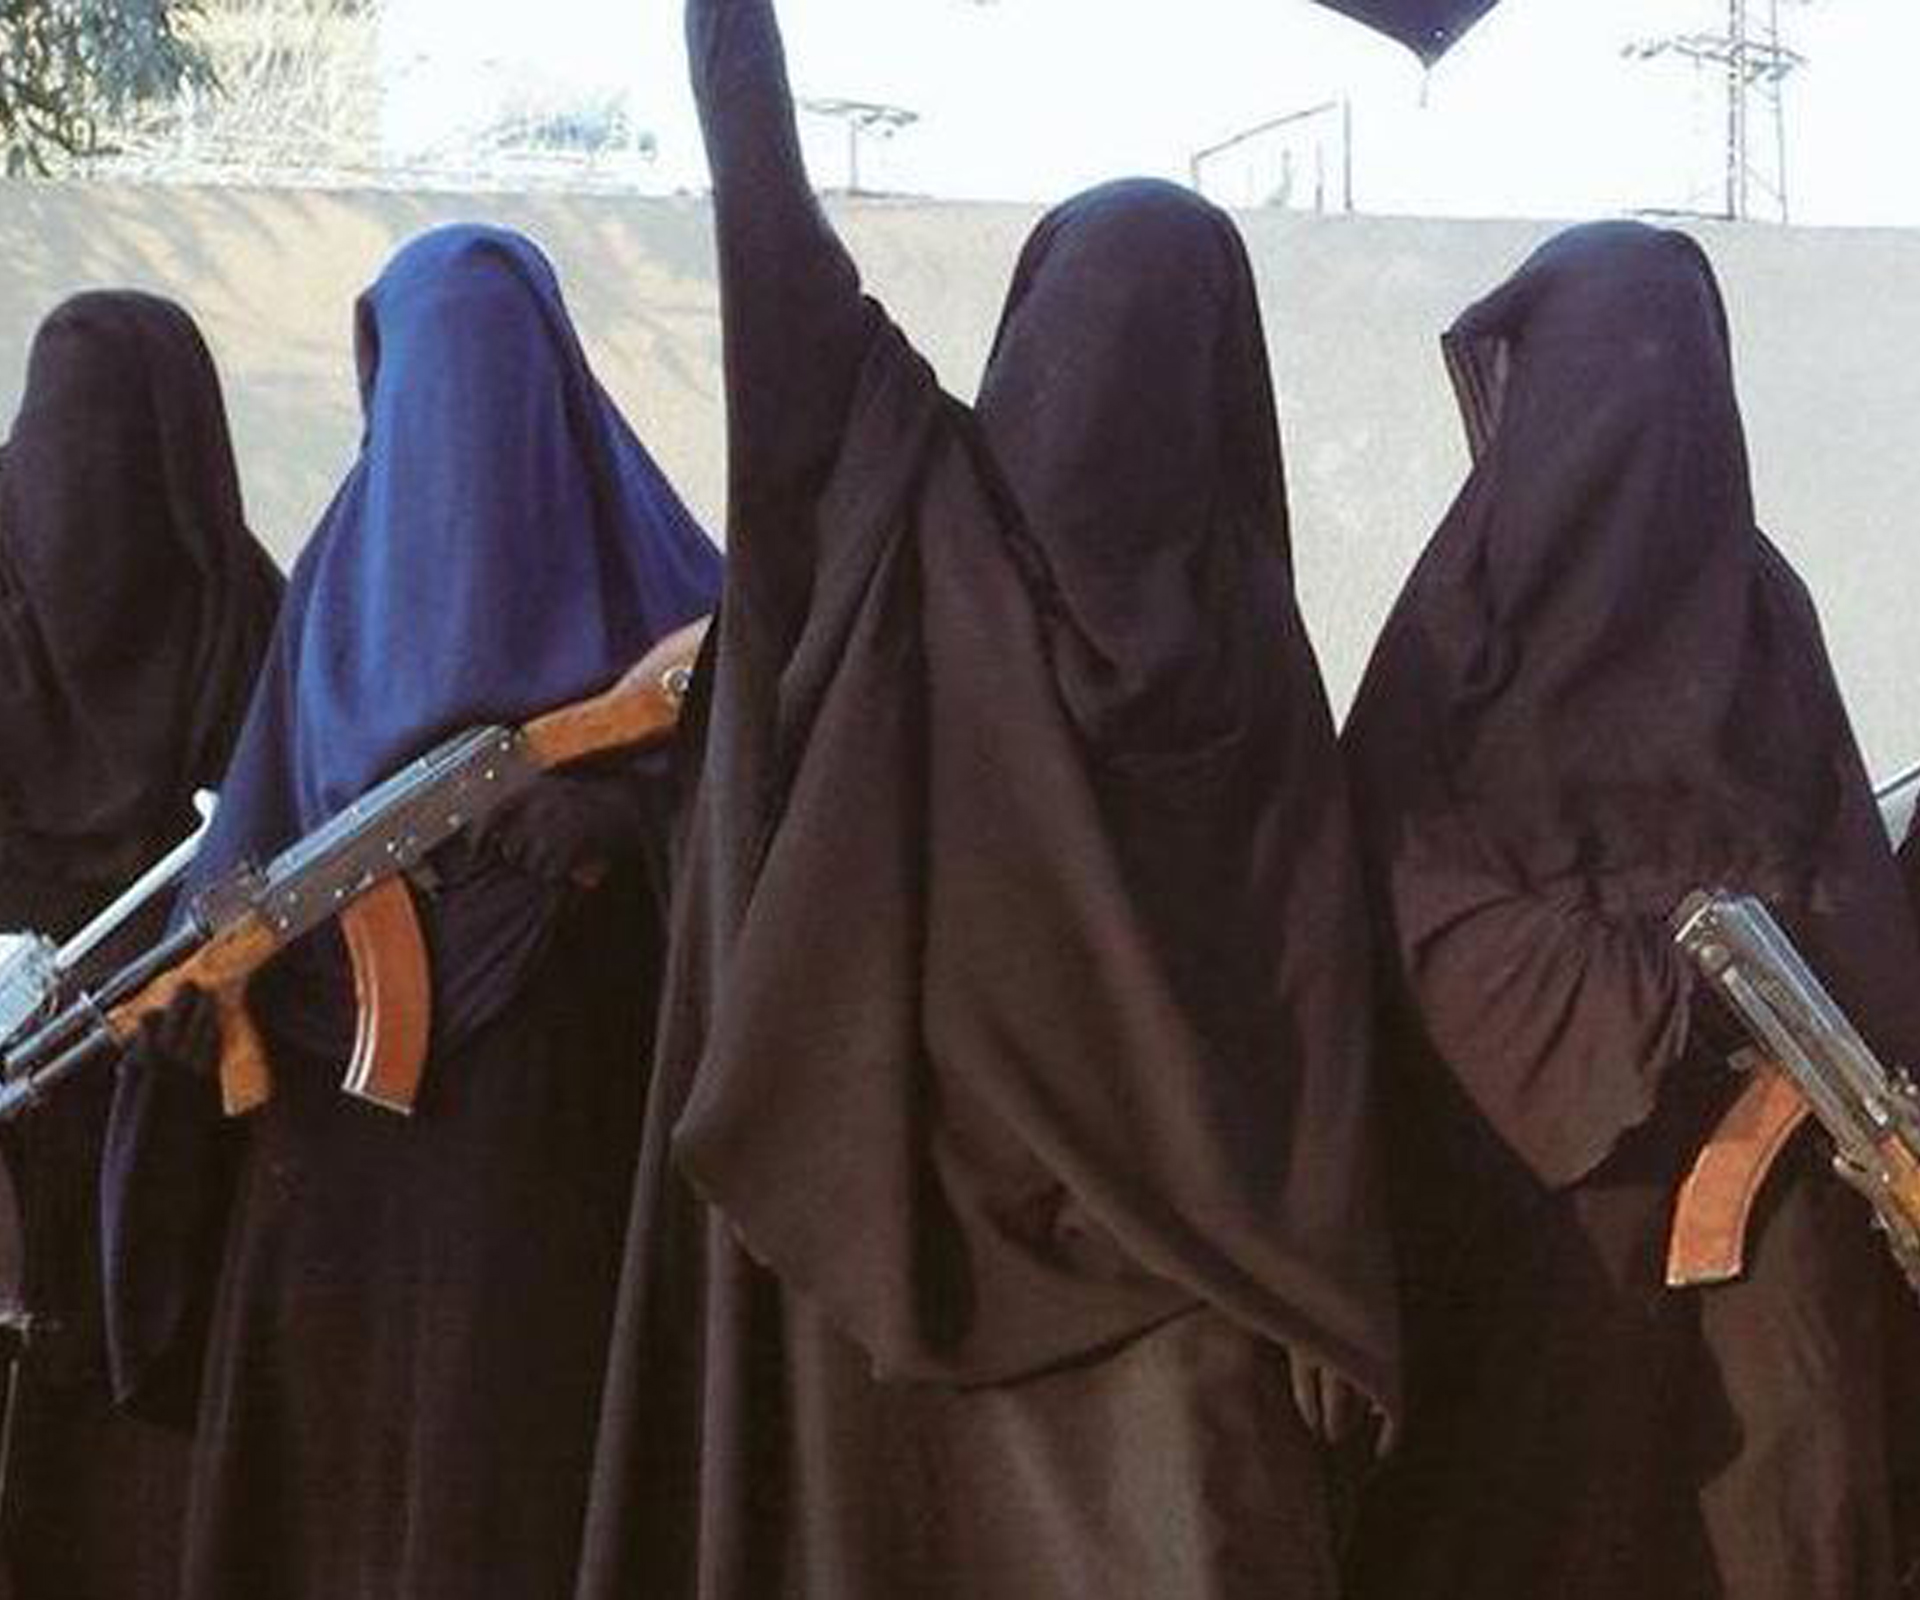 Women called to join terror frontline